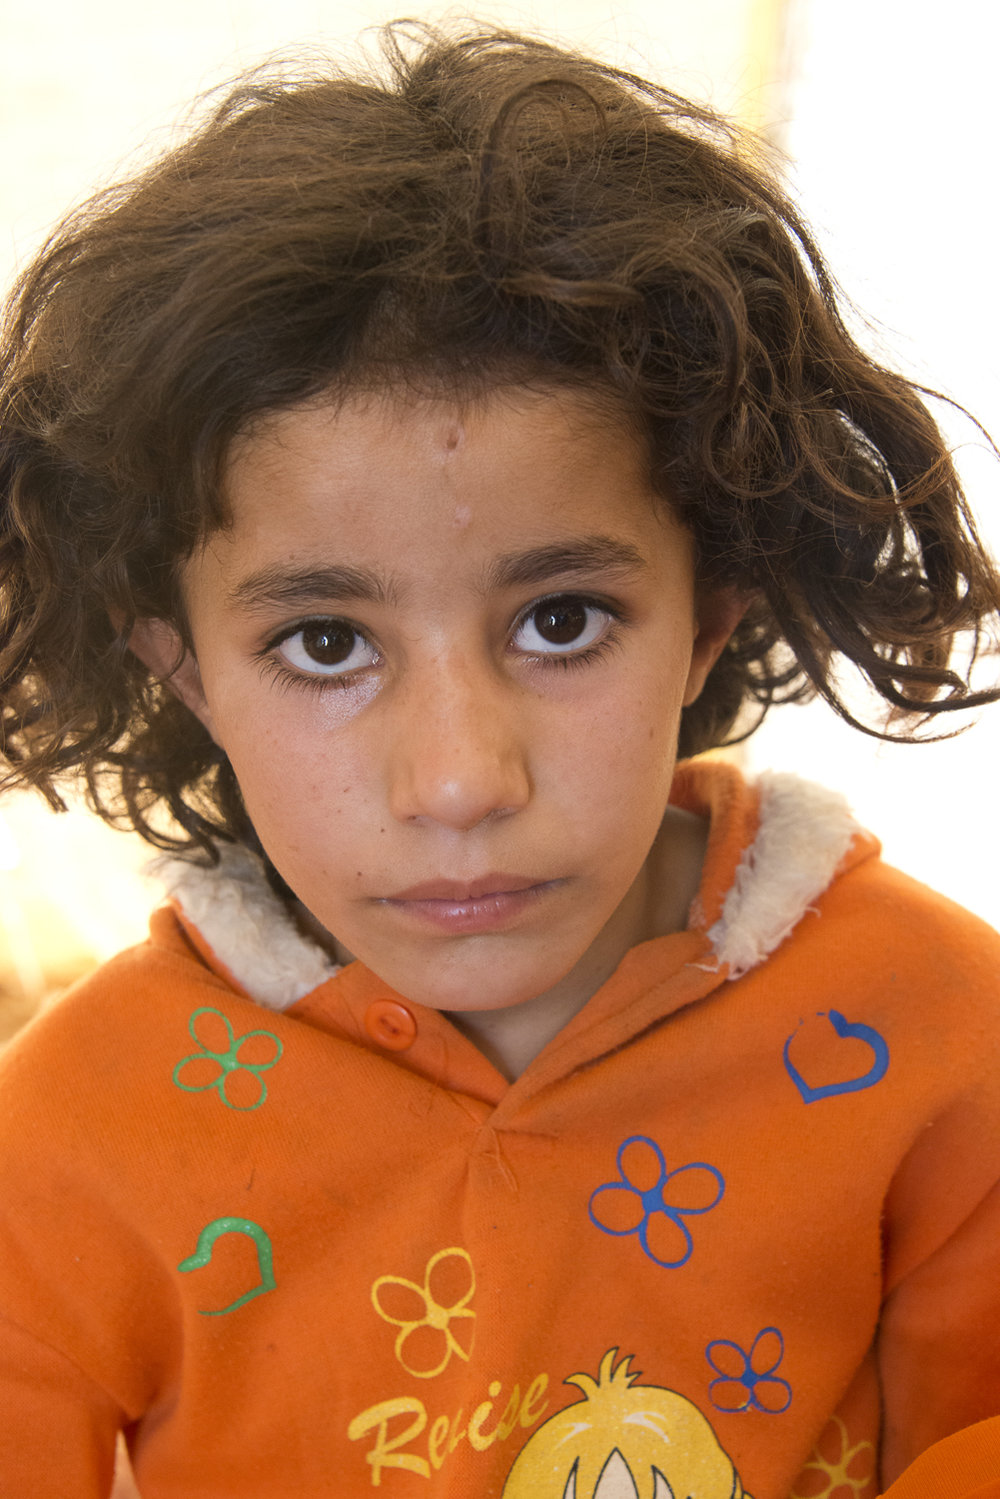 jo-kearney-photography-video-refugees-lebanon-bekaa-valley-syrian-refugees-girl.jpg